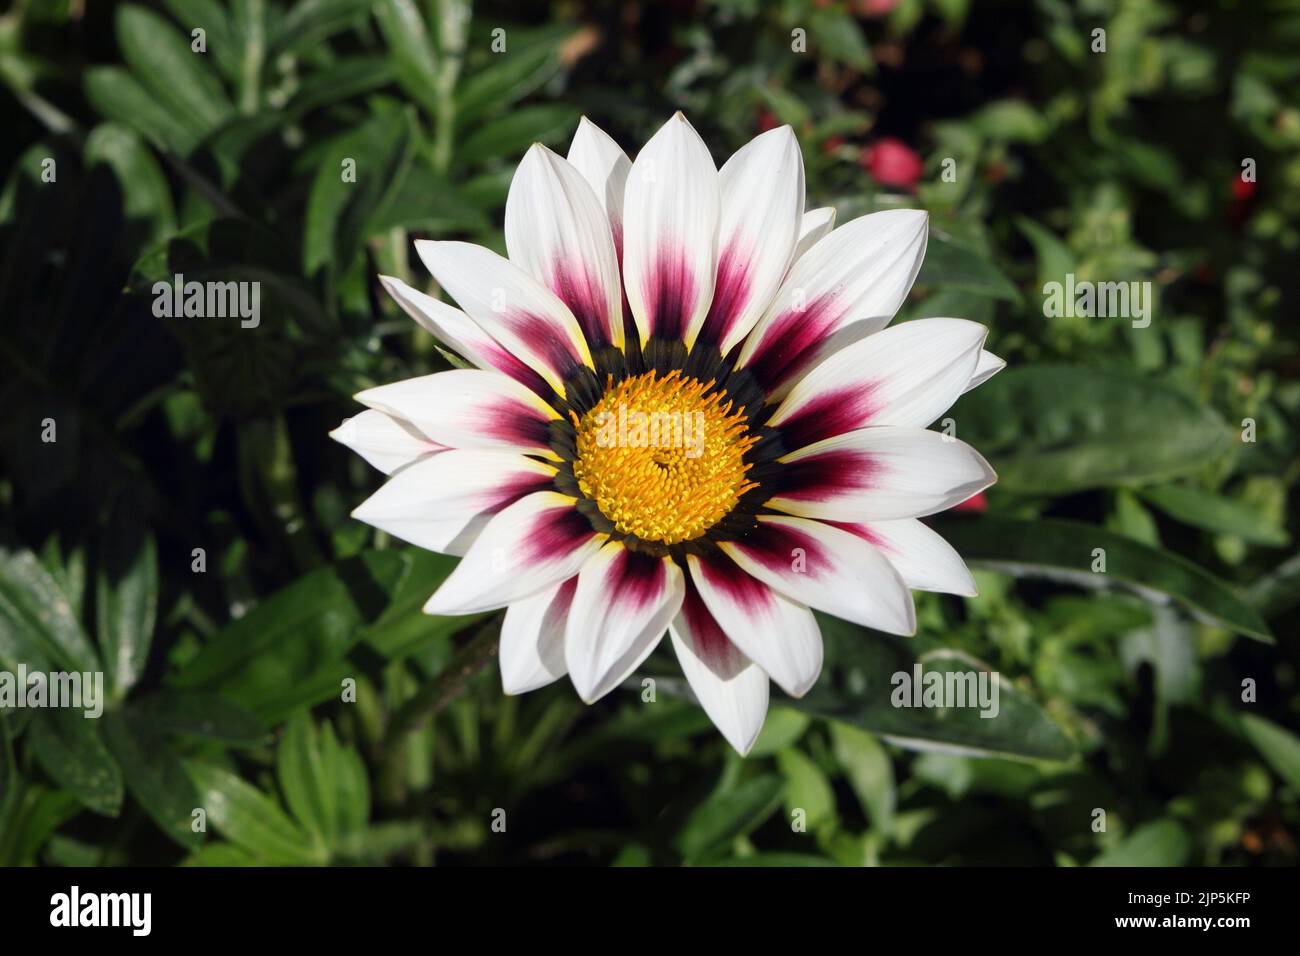 White petal gazania flower in bloom Stock Photo